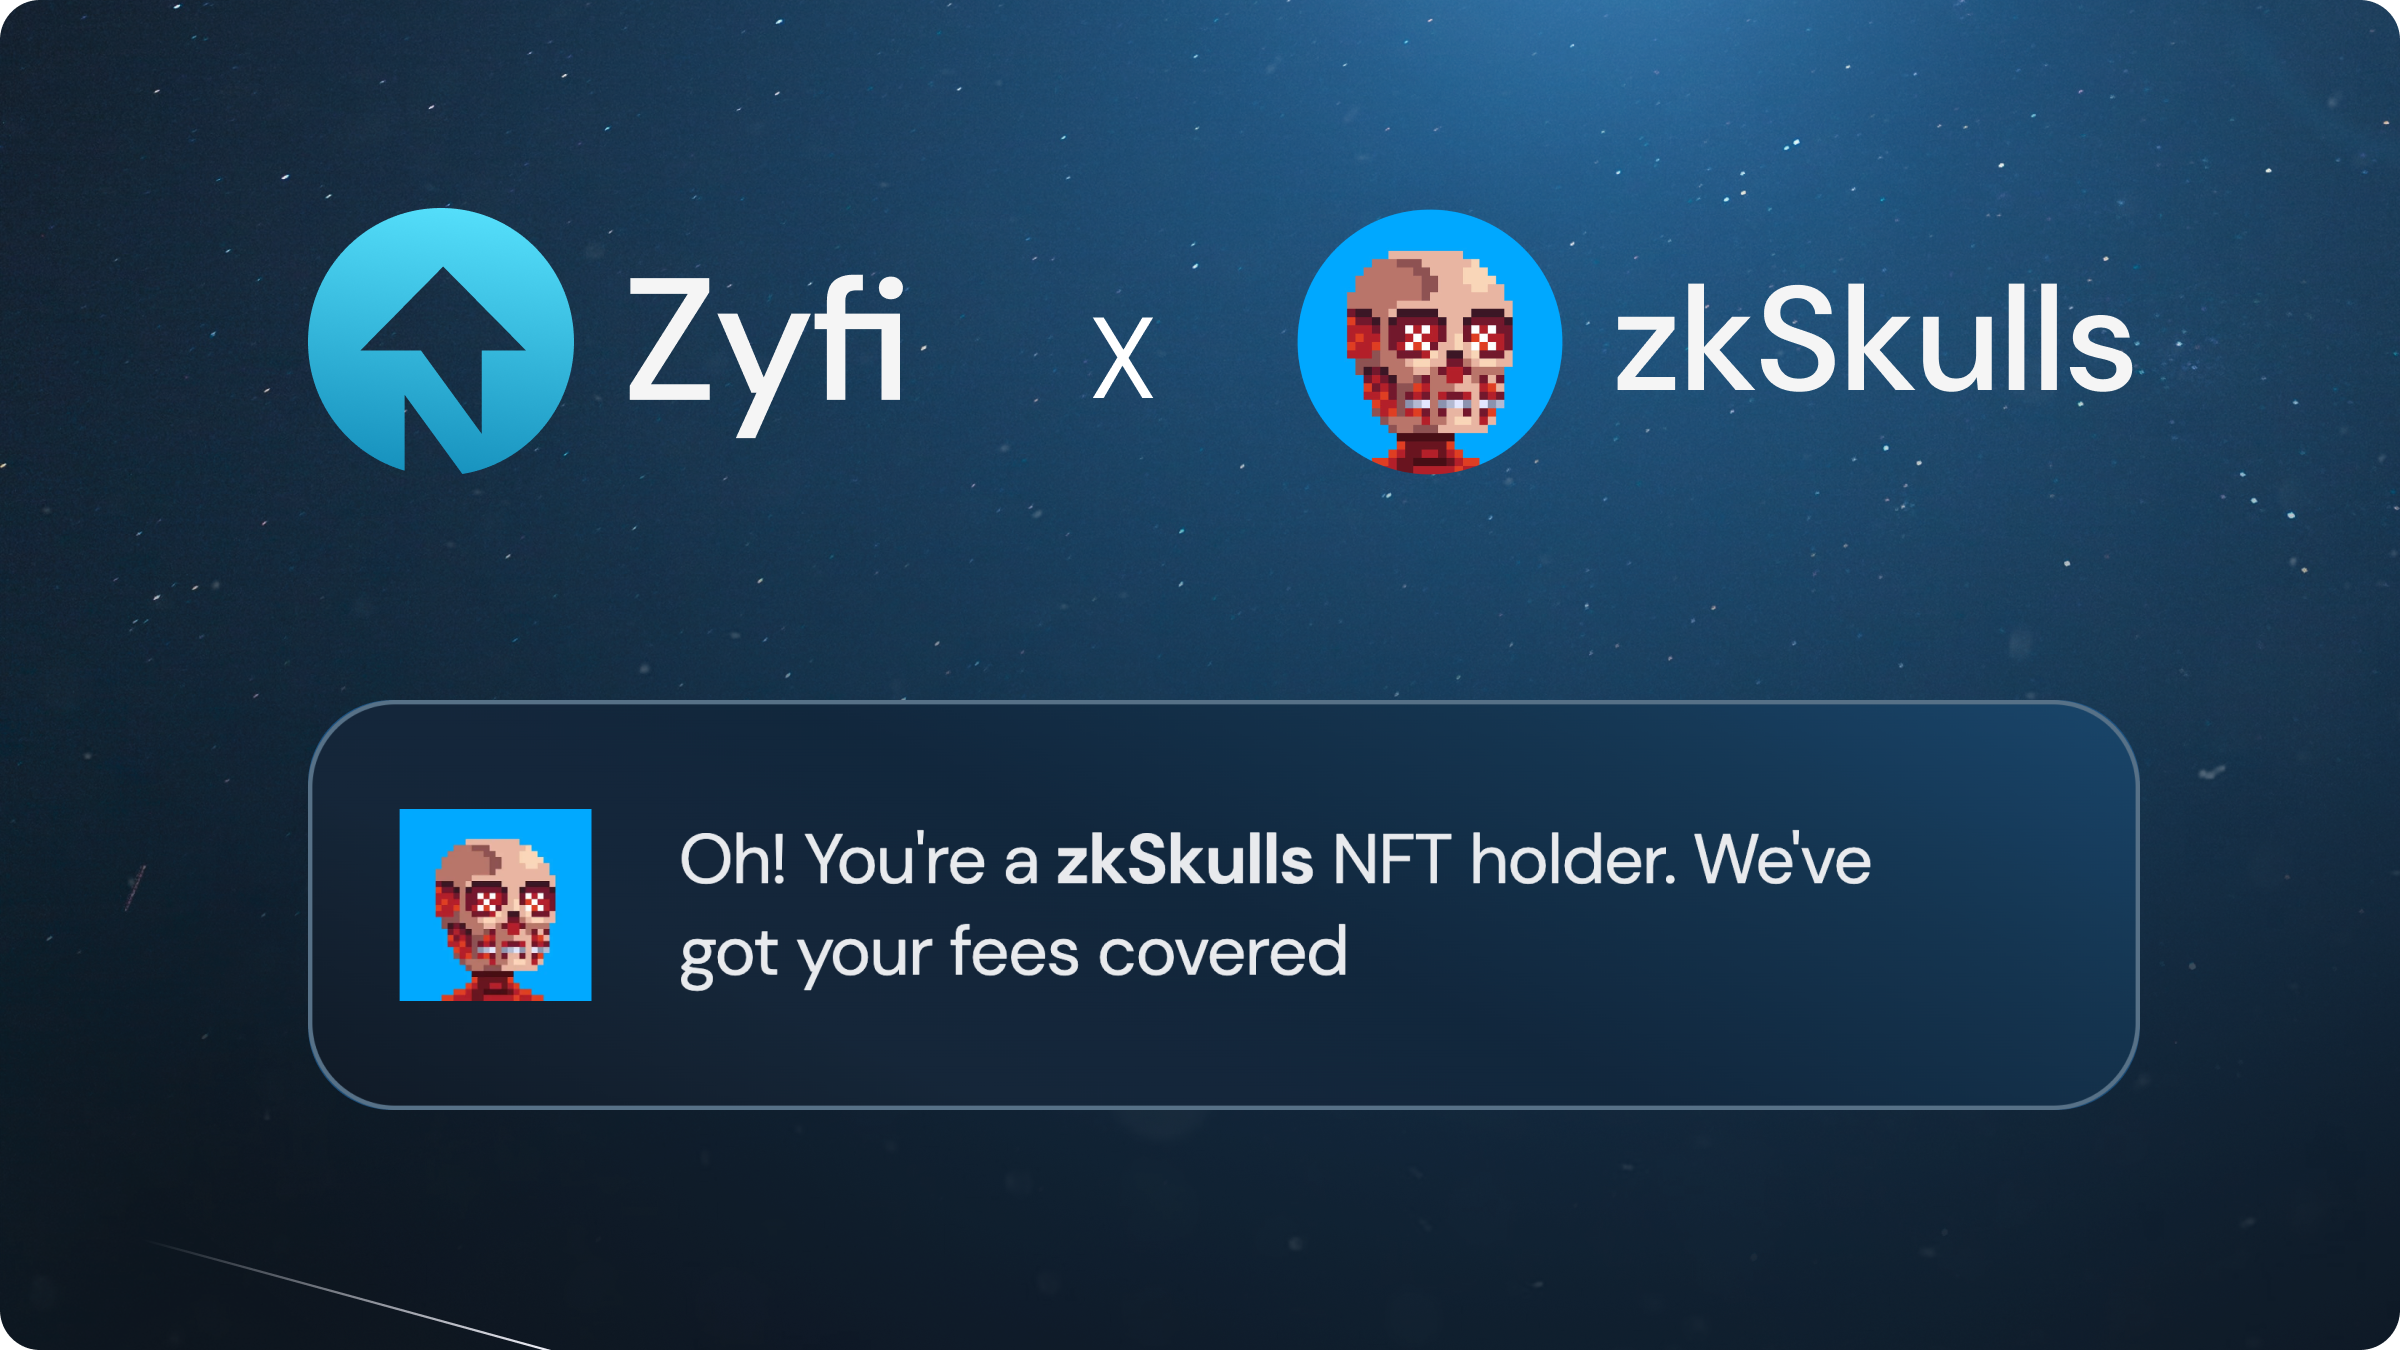 zkSkulls NFT Holders enjoy free-swaps